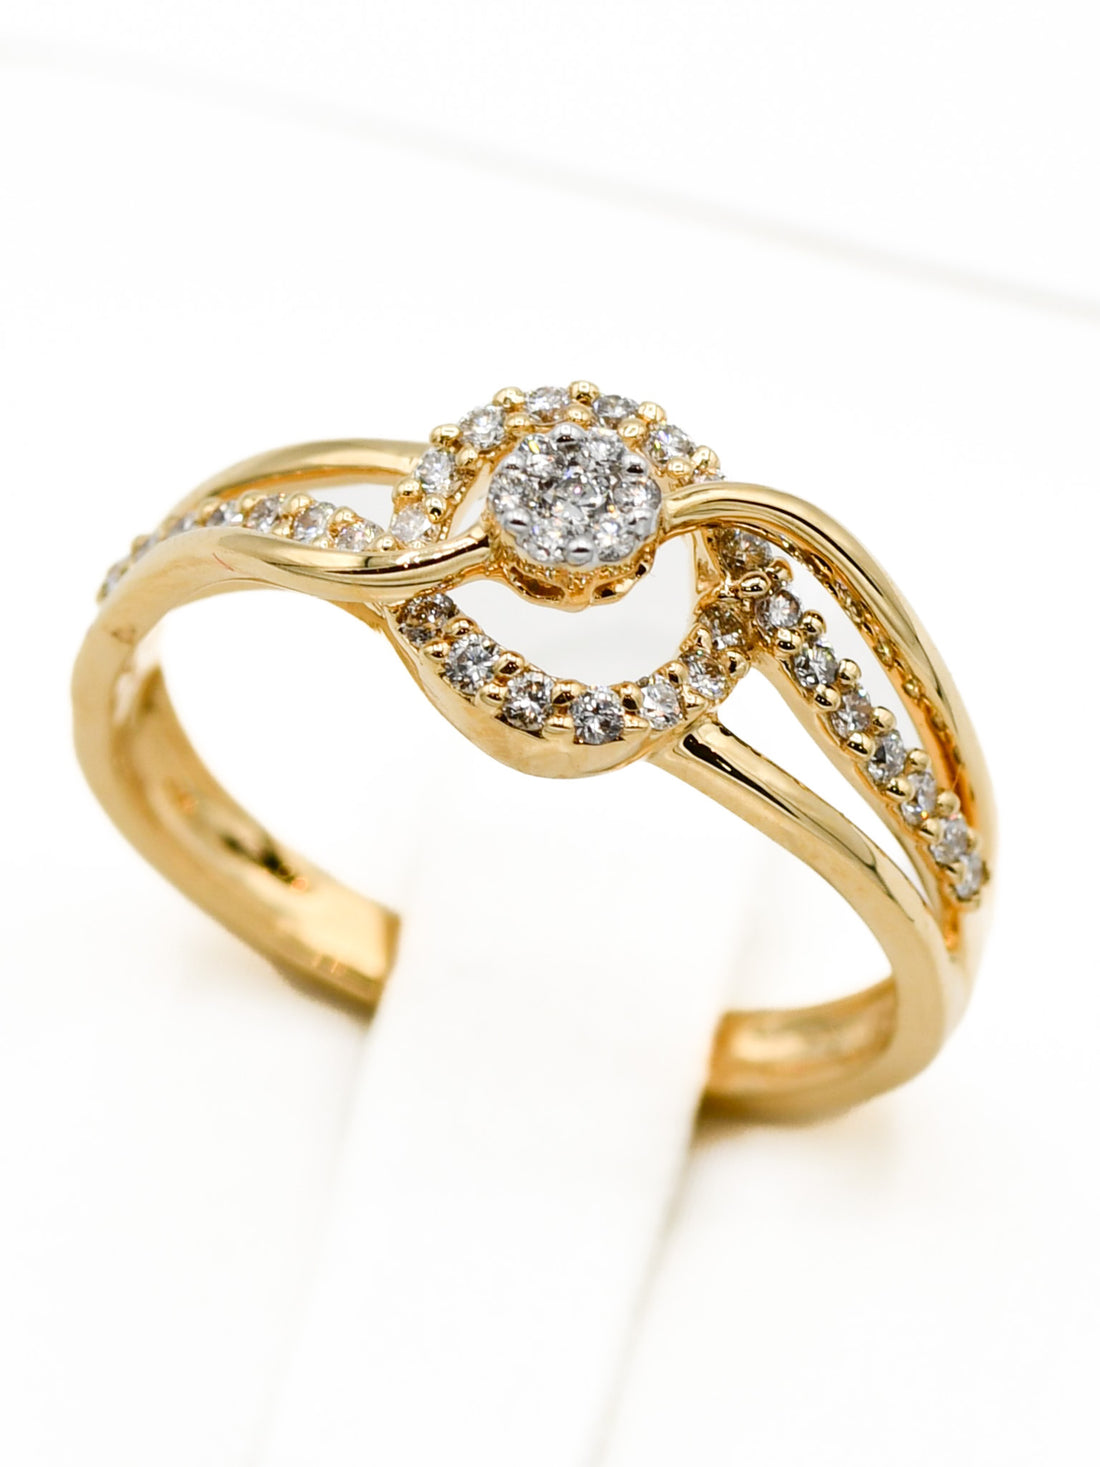 18ct Gold 0.28ct Diamond Ladies Ring - Roop Darshan